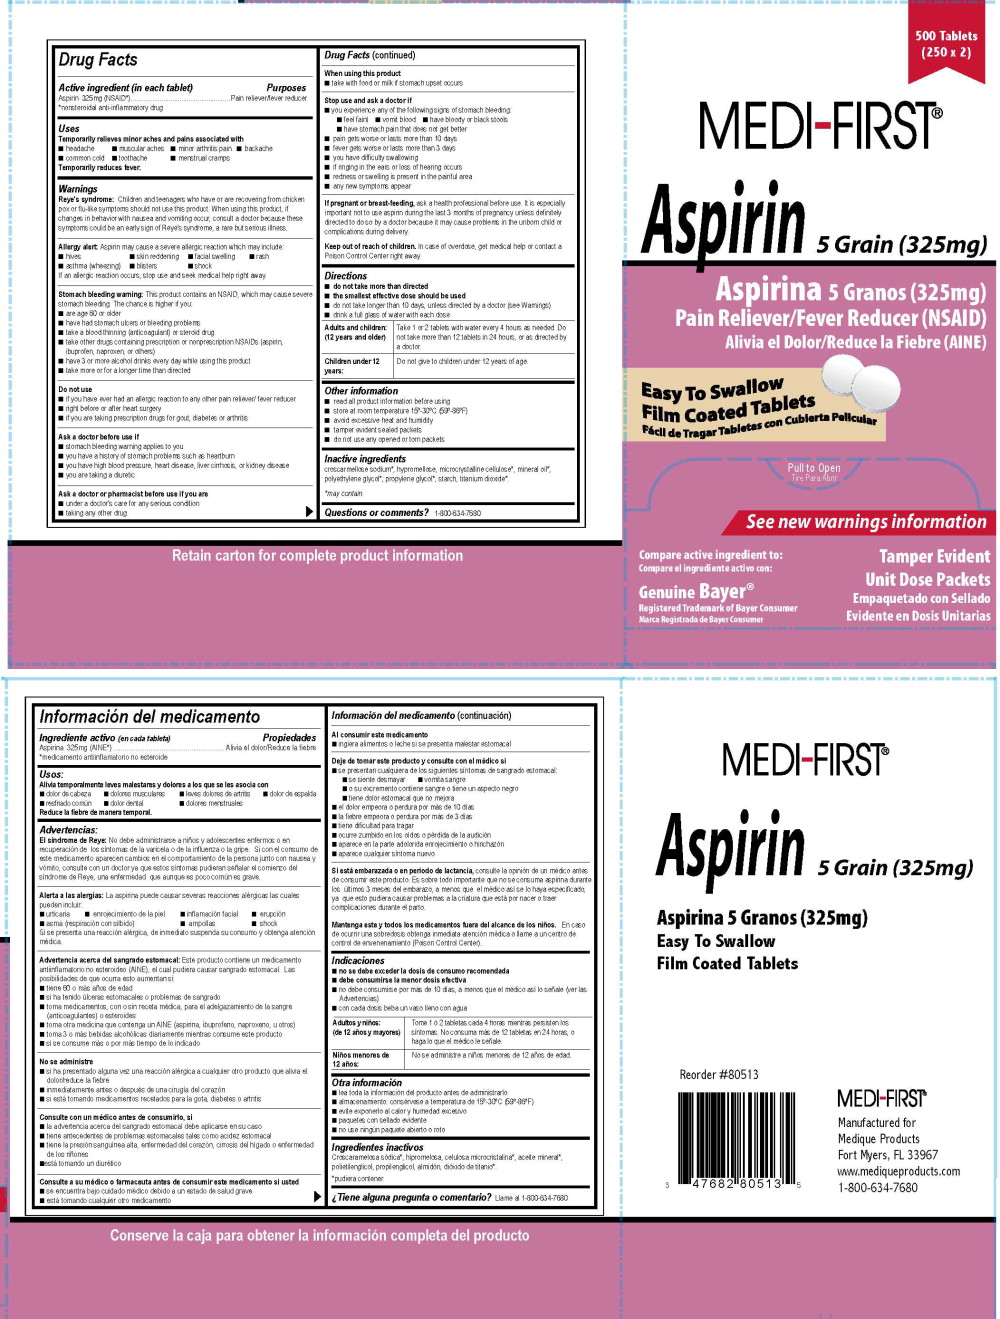 116R MF Aspirin 325 mg Label
